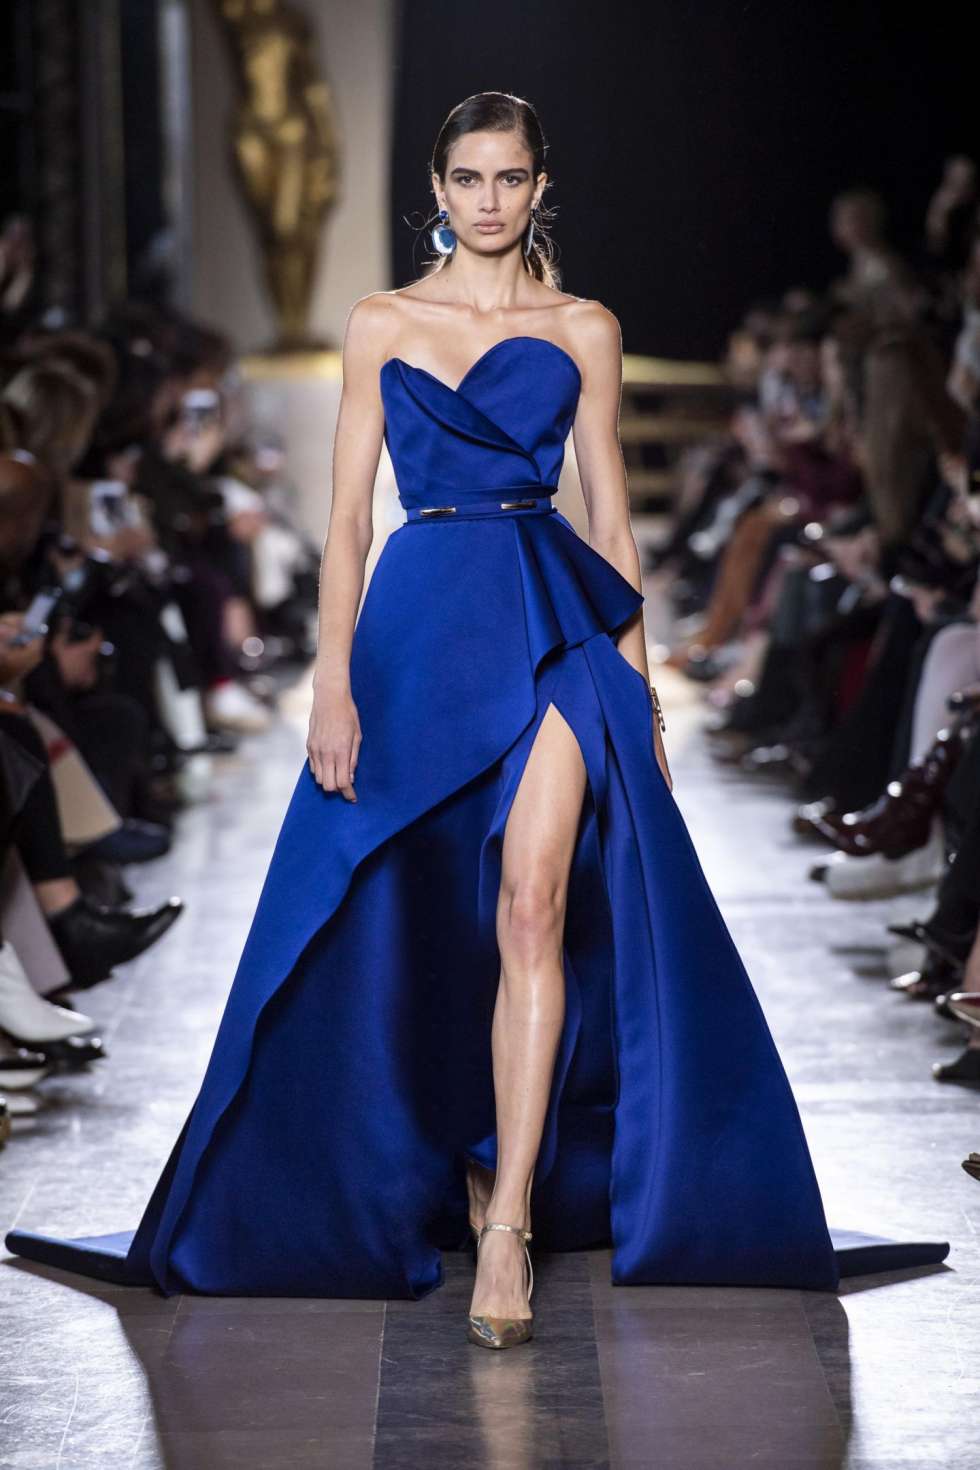 Dazzling Blue Engagement Dresses from Lebanese Designers